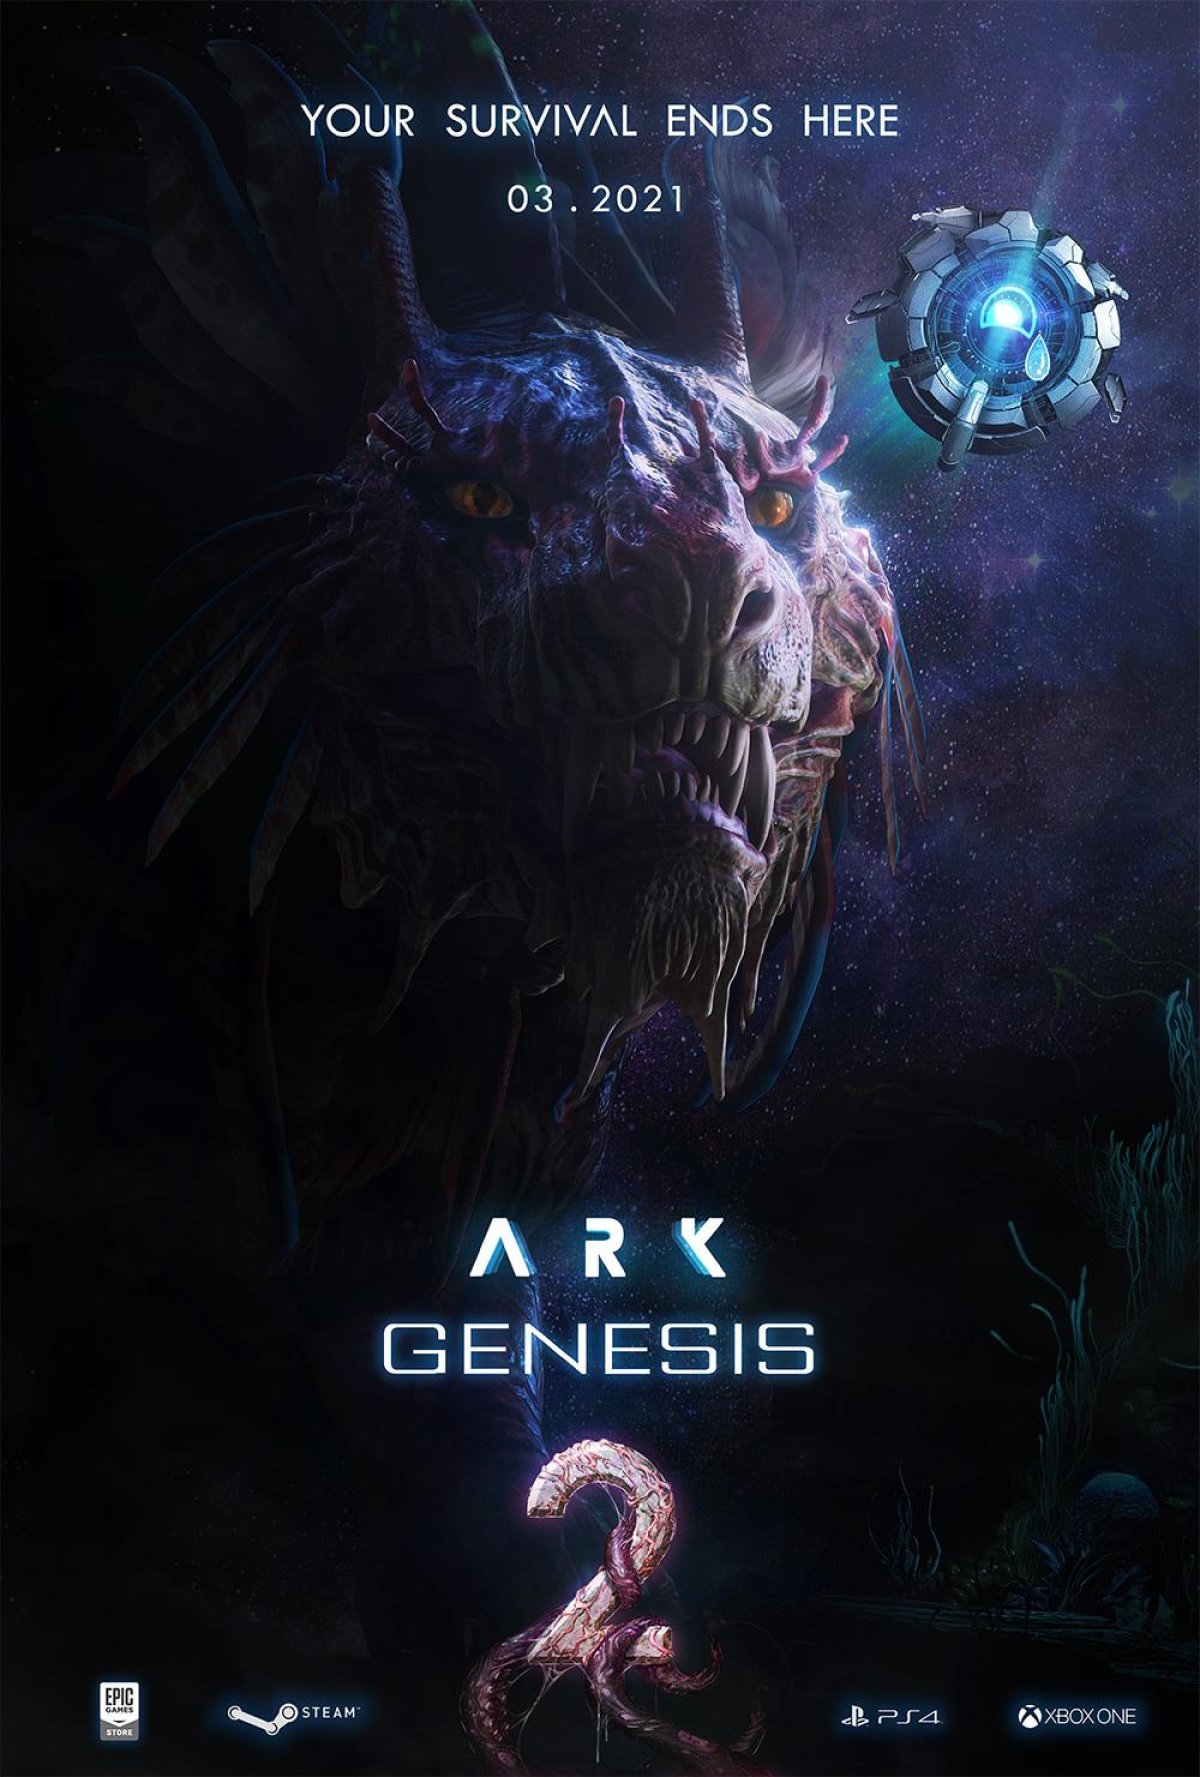 New creature coming in genesis pt 2. : r/ARK